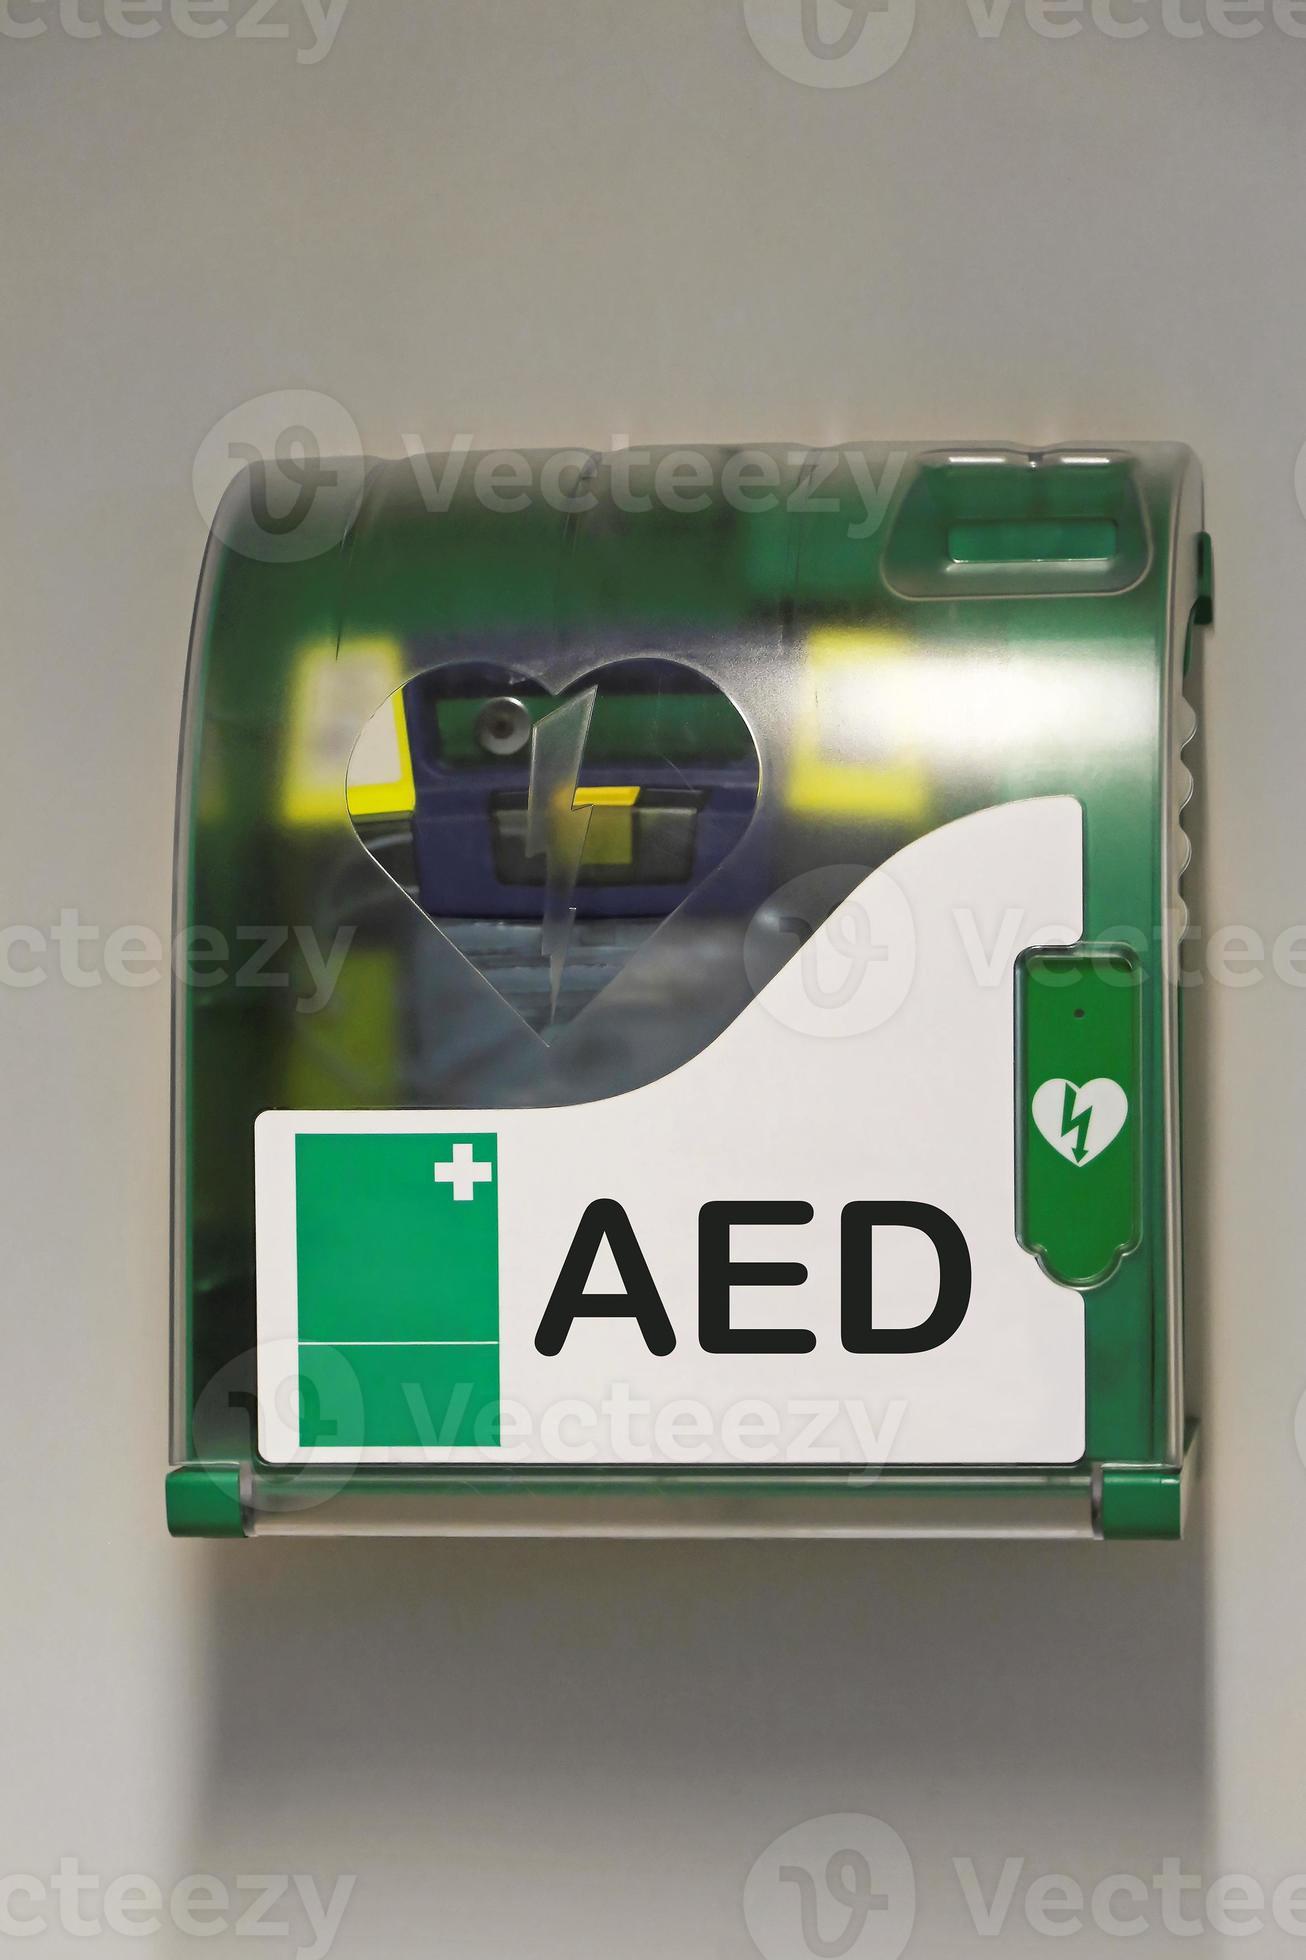 Automated external defibrillator photo